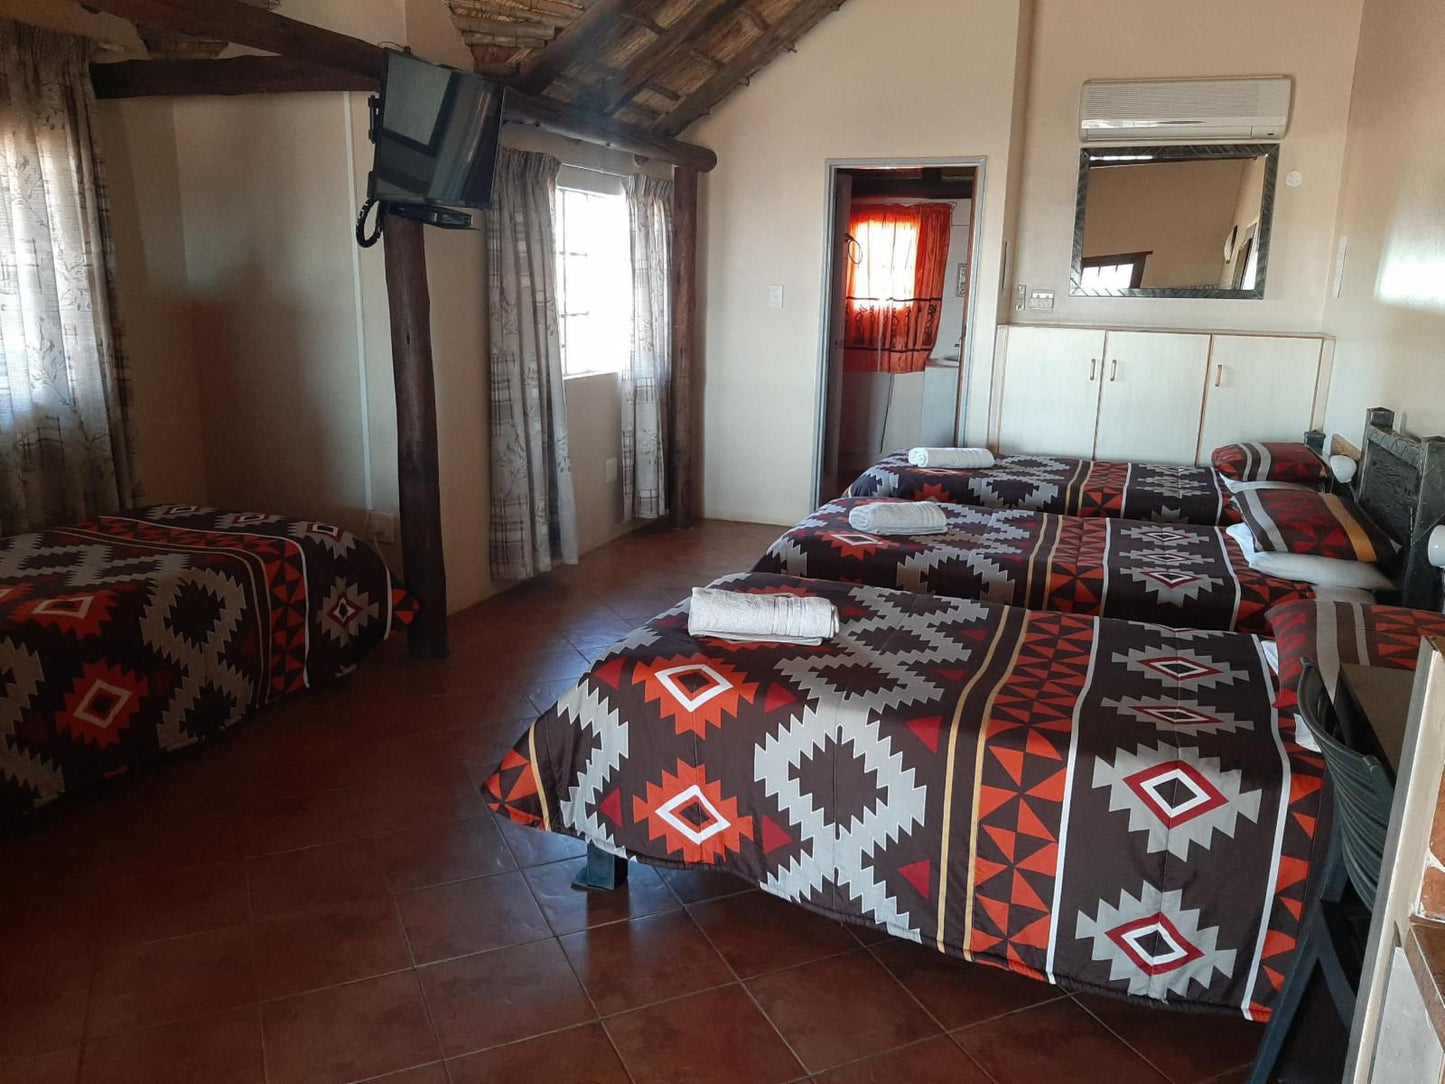 Kalahari Monate Lodge And Camping Upington Northern Cape South Africa Bedroom